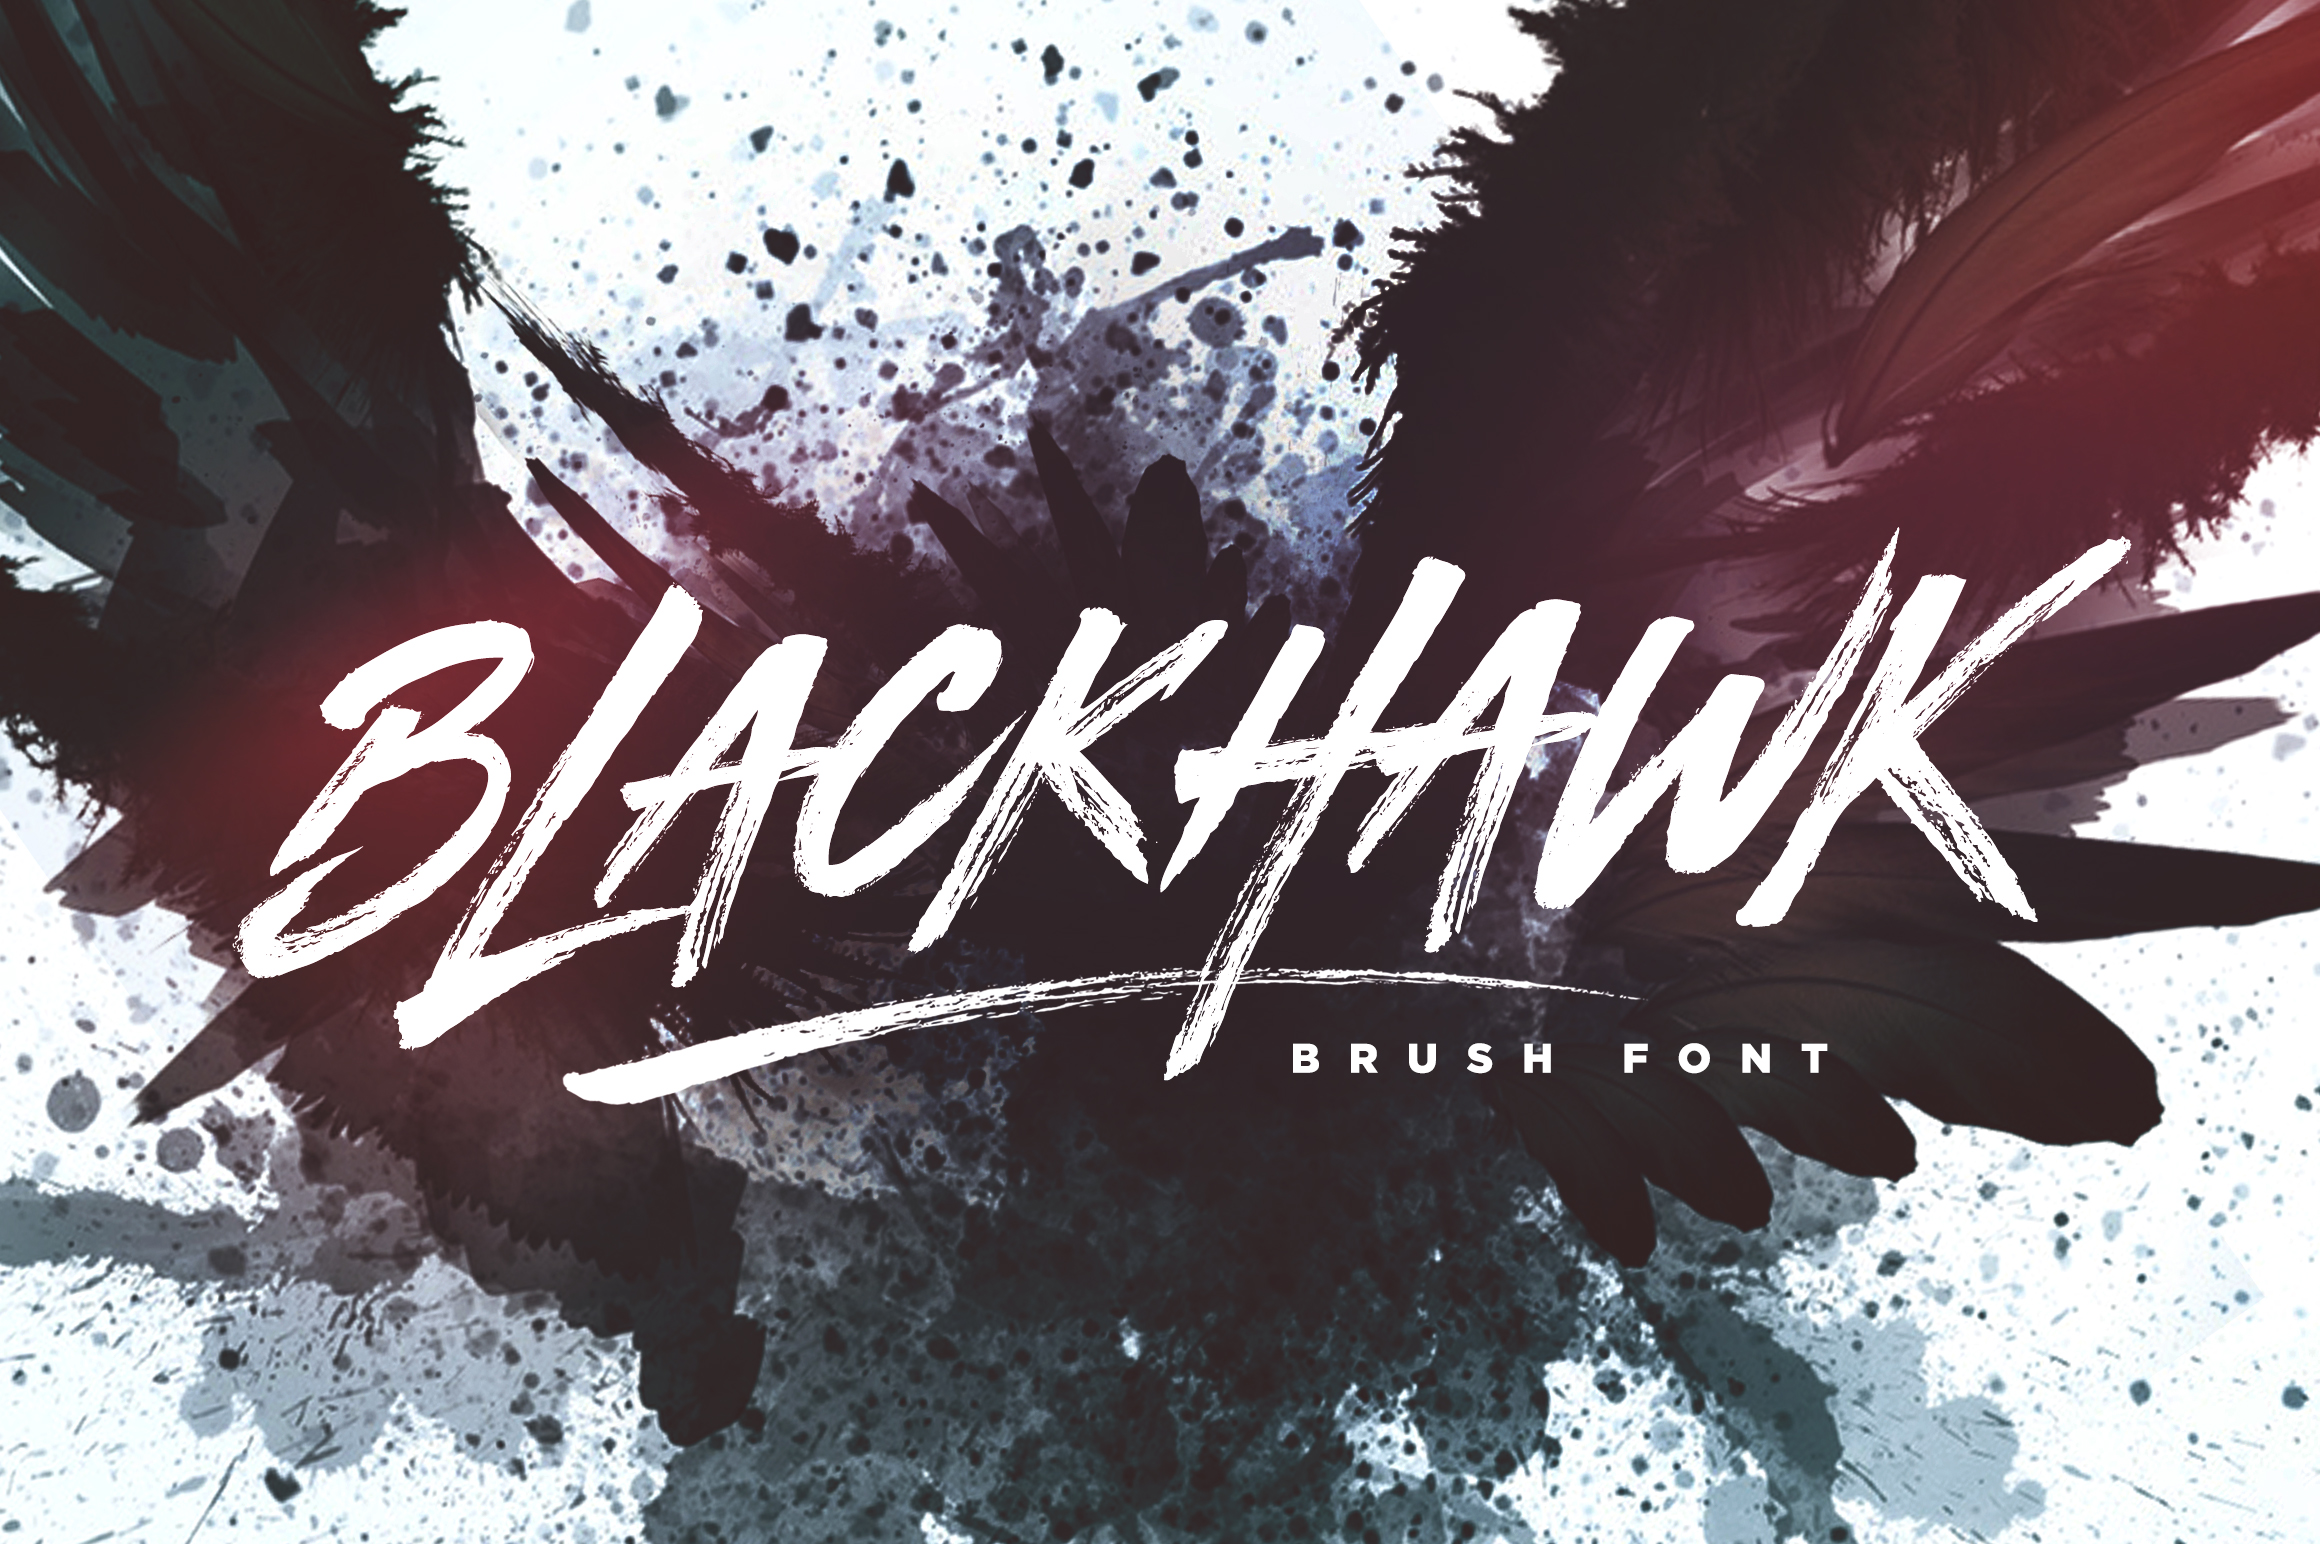 BLACKHAWK Brush Font by Set Sail Studios